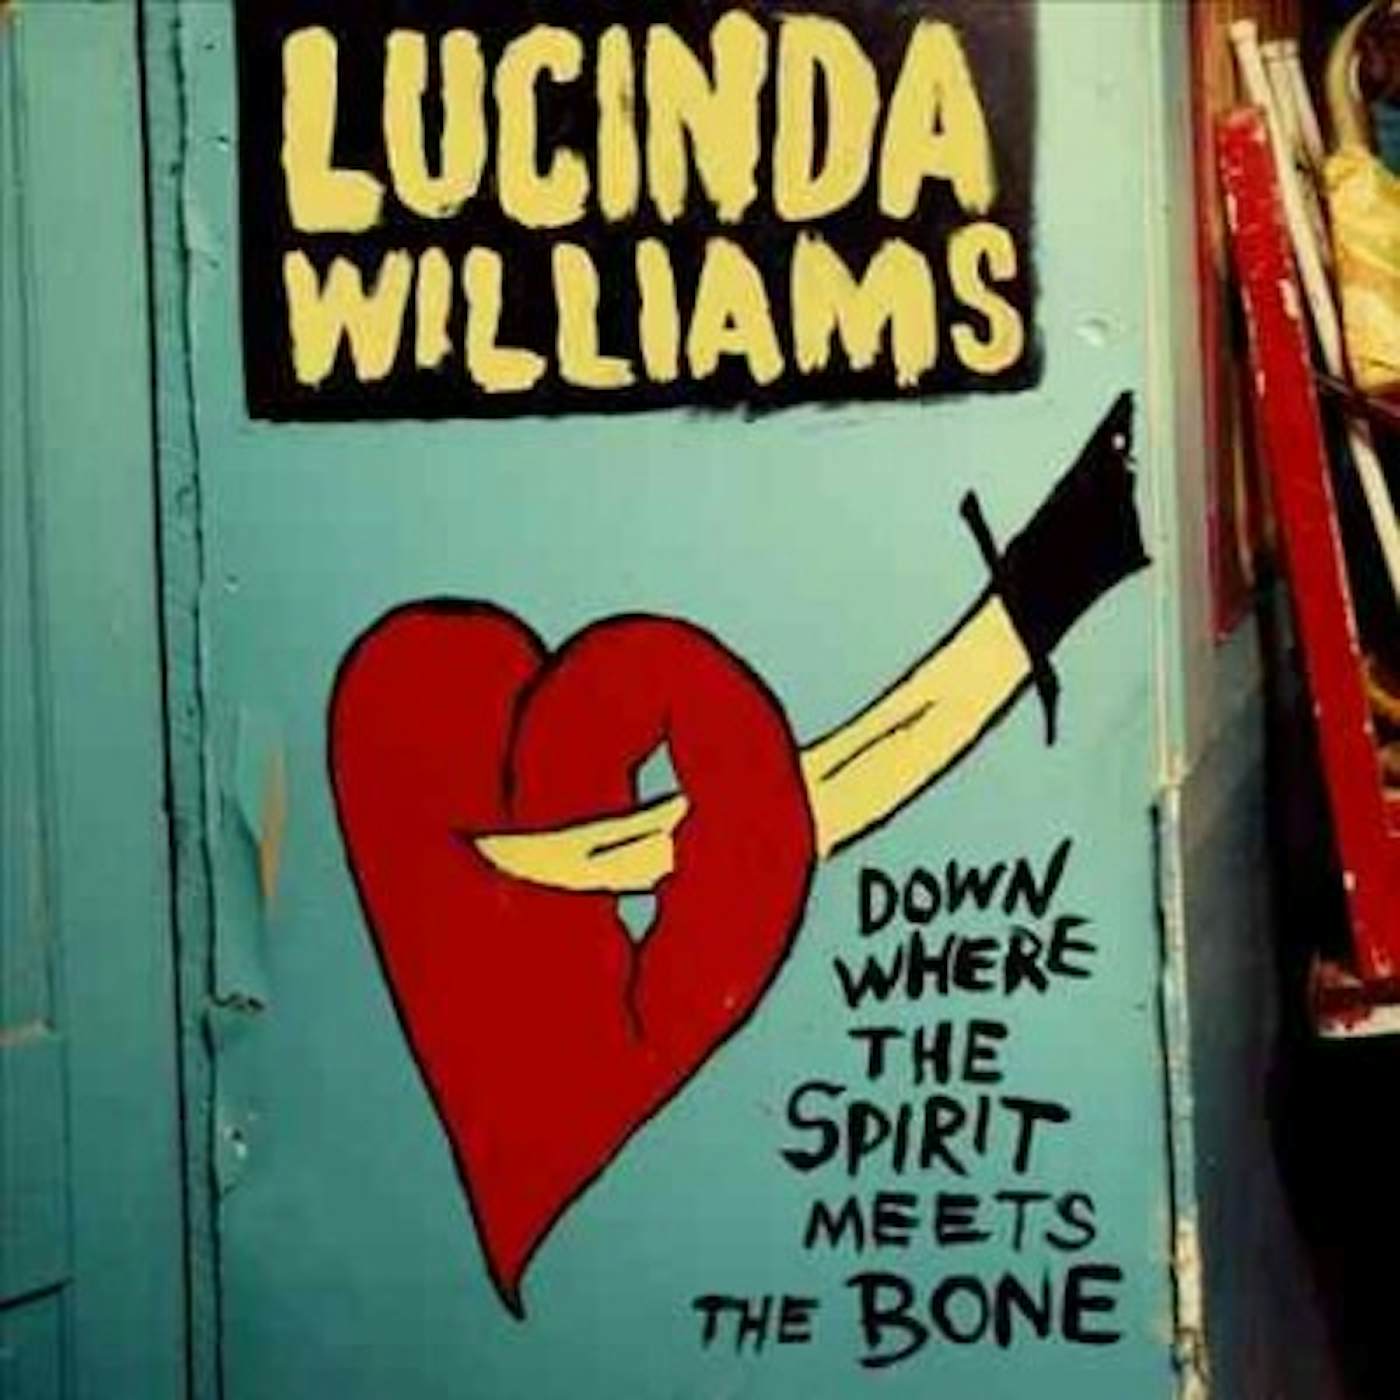 Lucinda Williams Down Where the Spirit Meets the Bone Vinyl Record